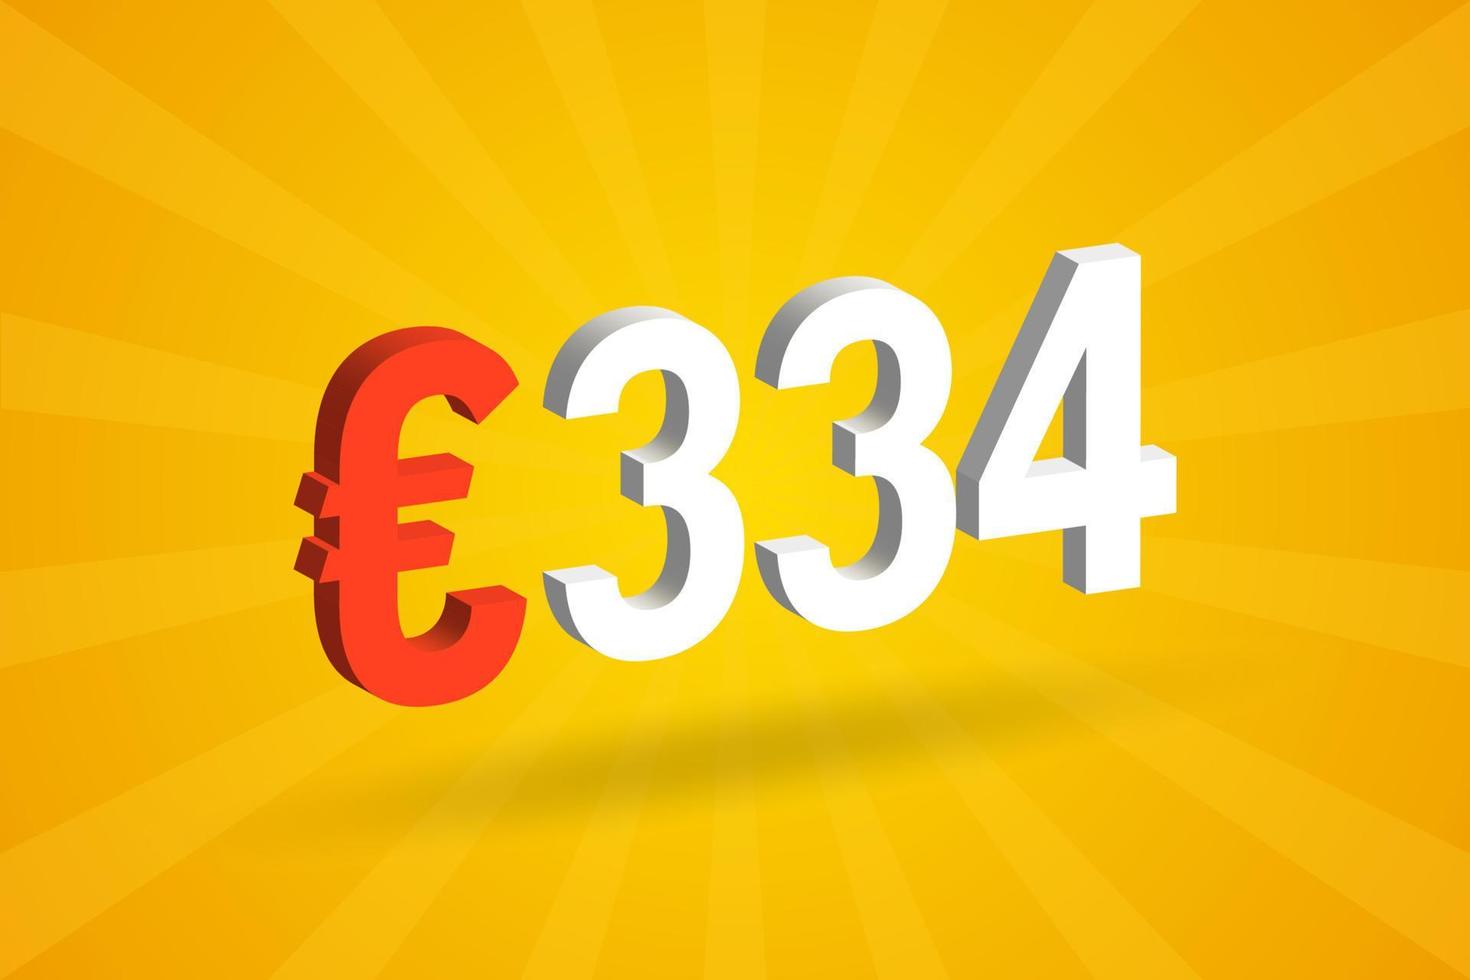 334 Euro Currency 3D vector text symbol. 3D 334 Euro European Union Money stock vector